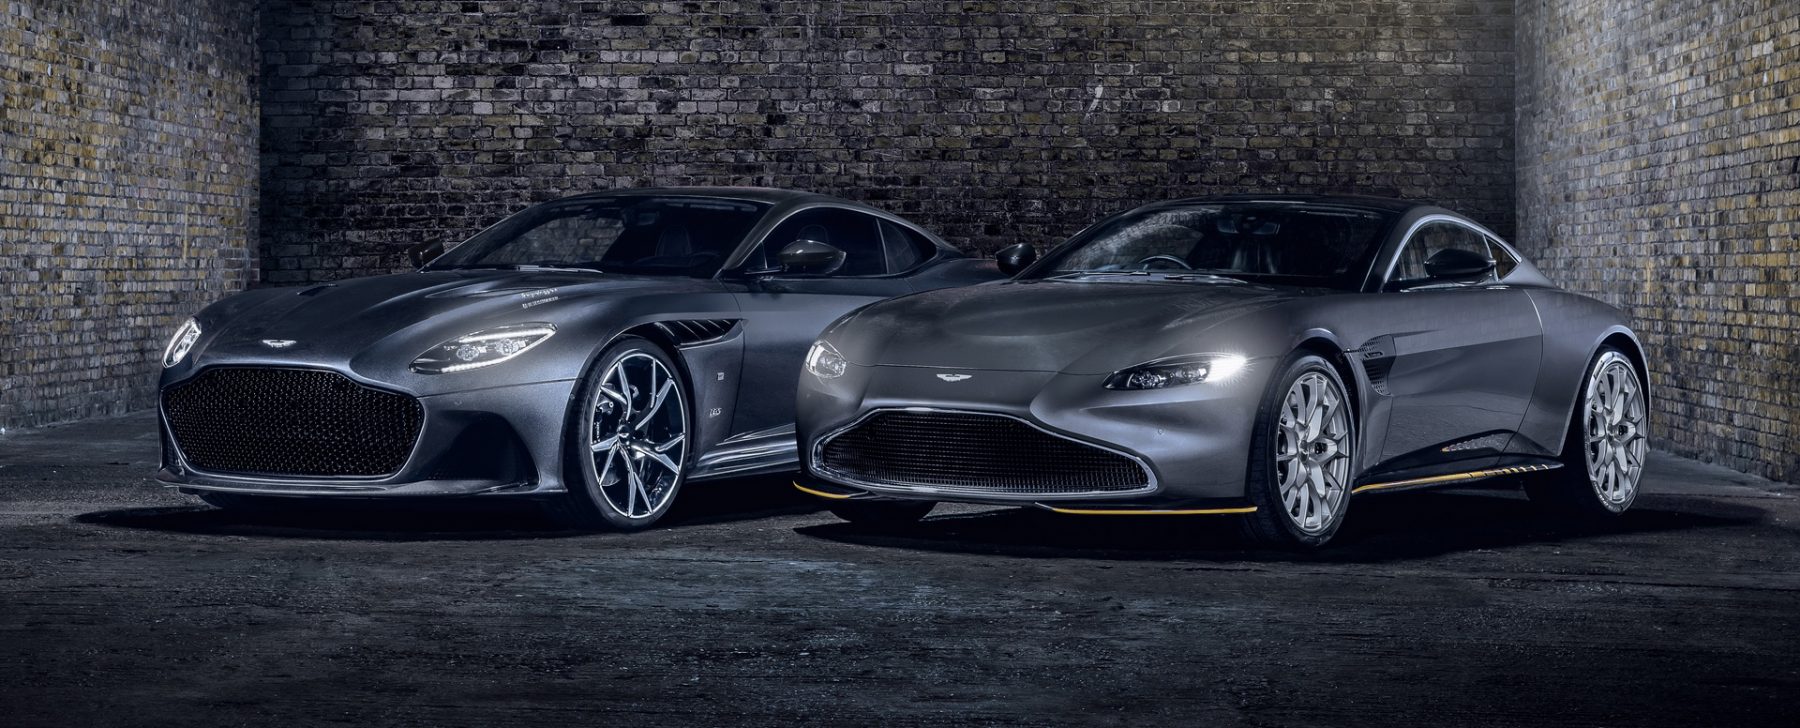 Aston Martin DBS Superleggera y Vantage 007 Edition